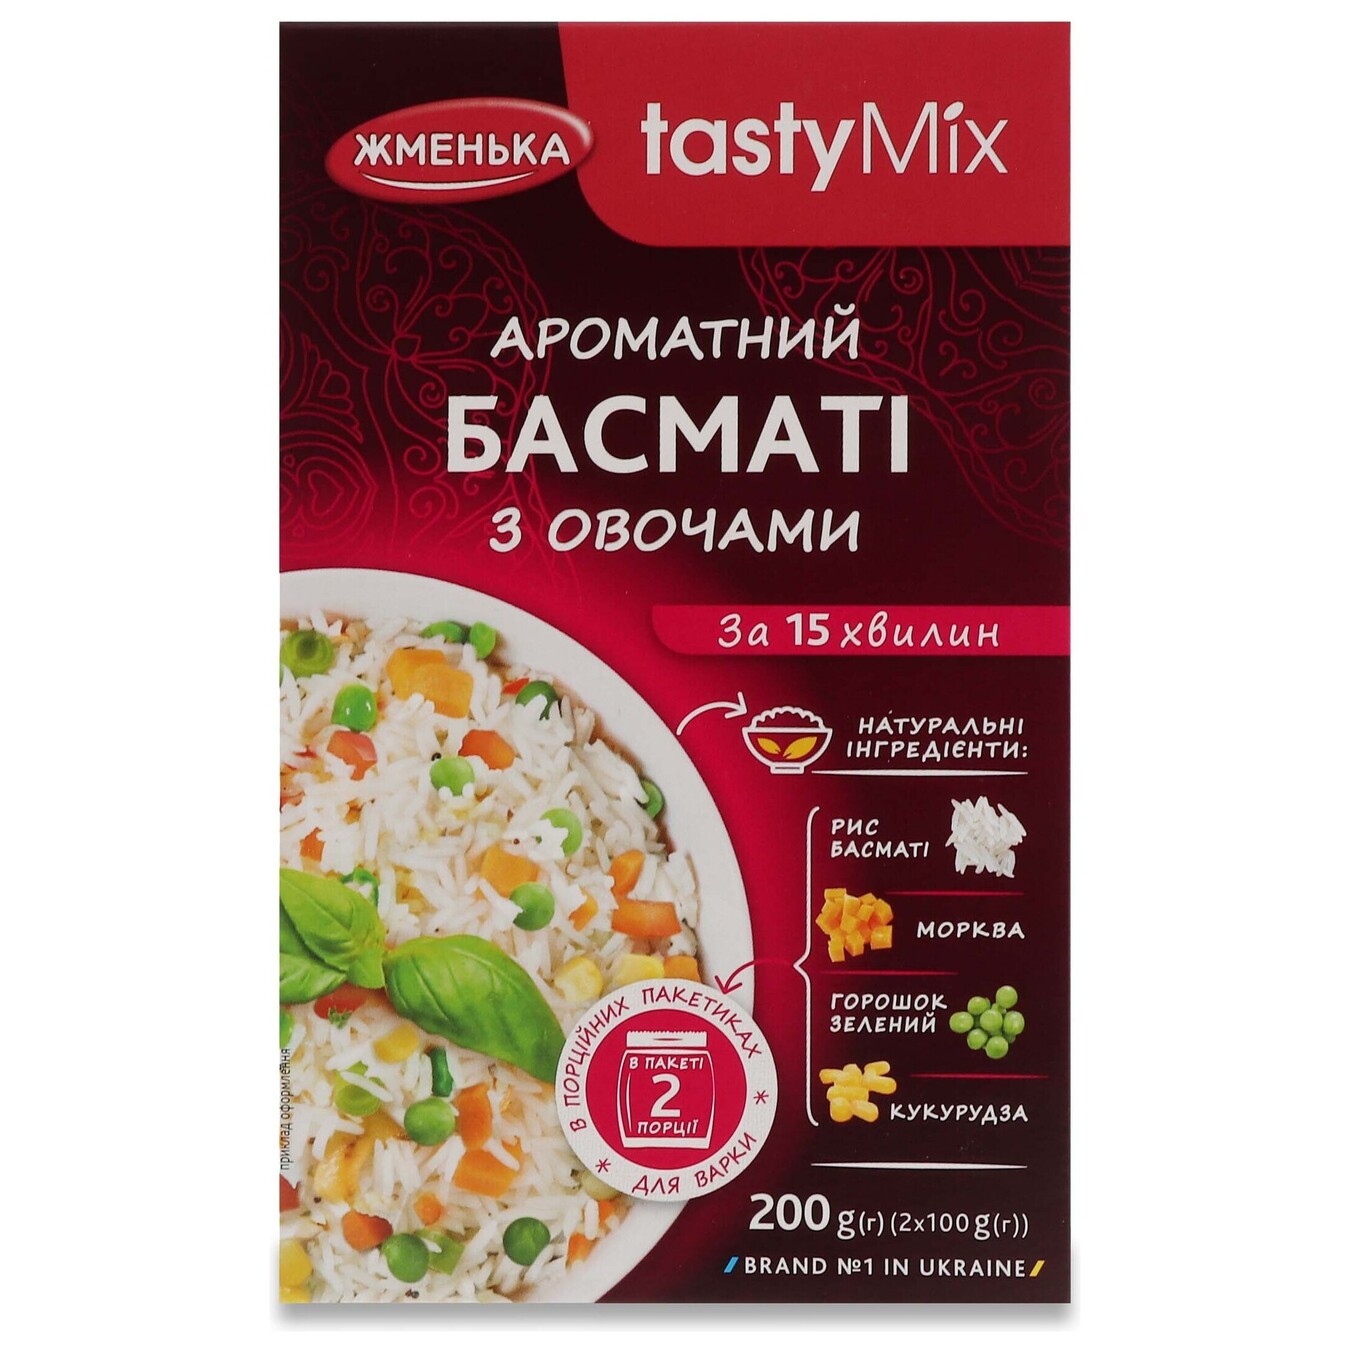 Zhmenka Basmati rice with vegetables 200g